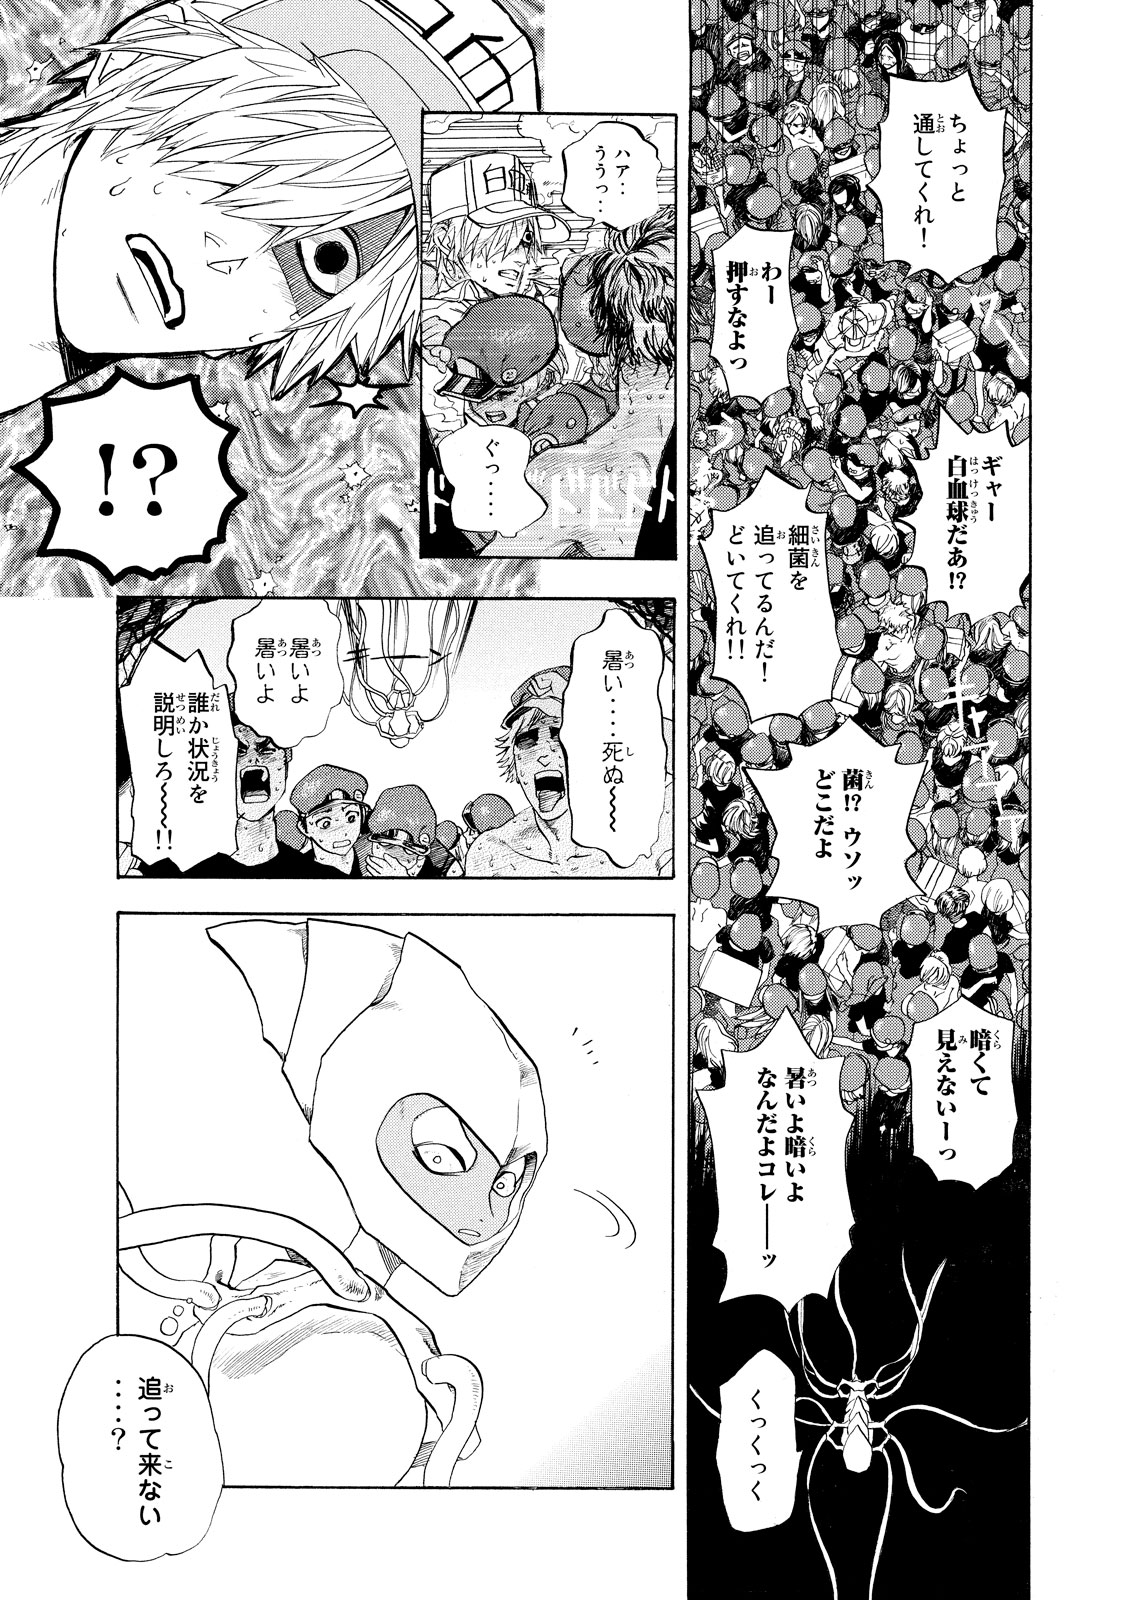 Hataraku Saibou - Chapter 6 - Page 15